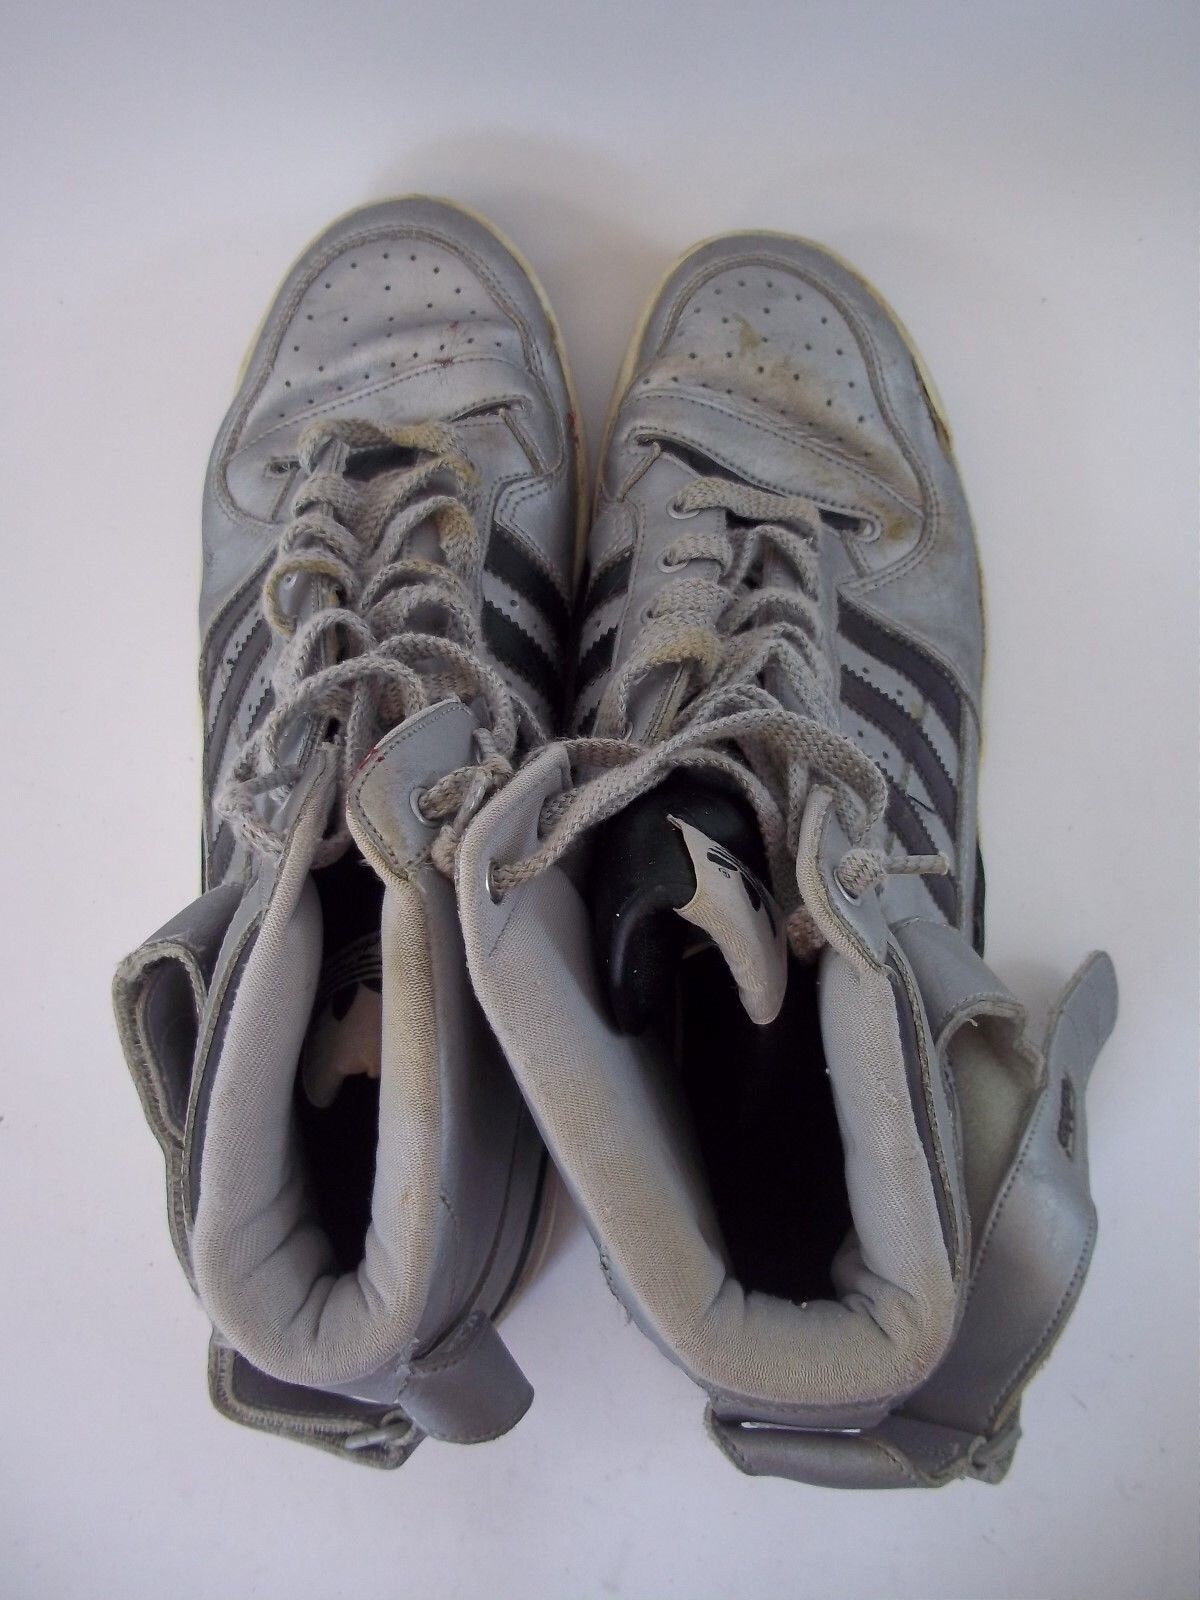 Rare Vintage 1990 Adidas HighTop Shoes Size 13 Silver & Black | Etsy